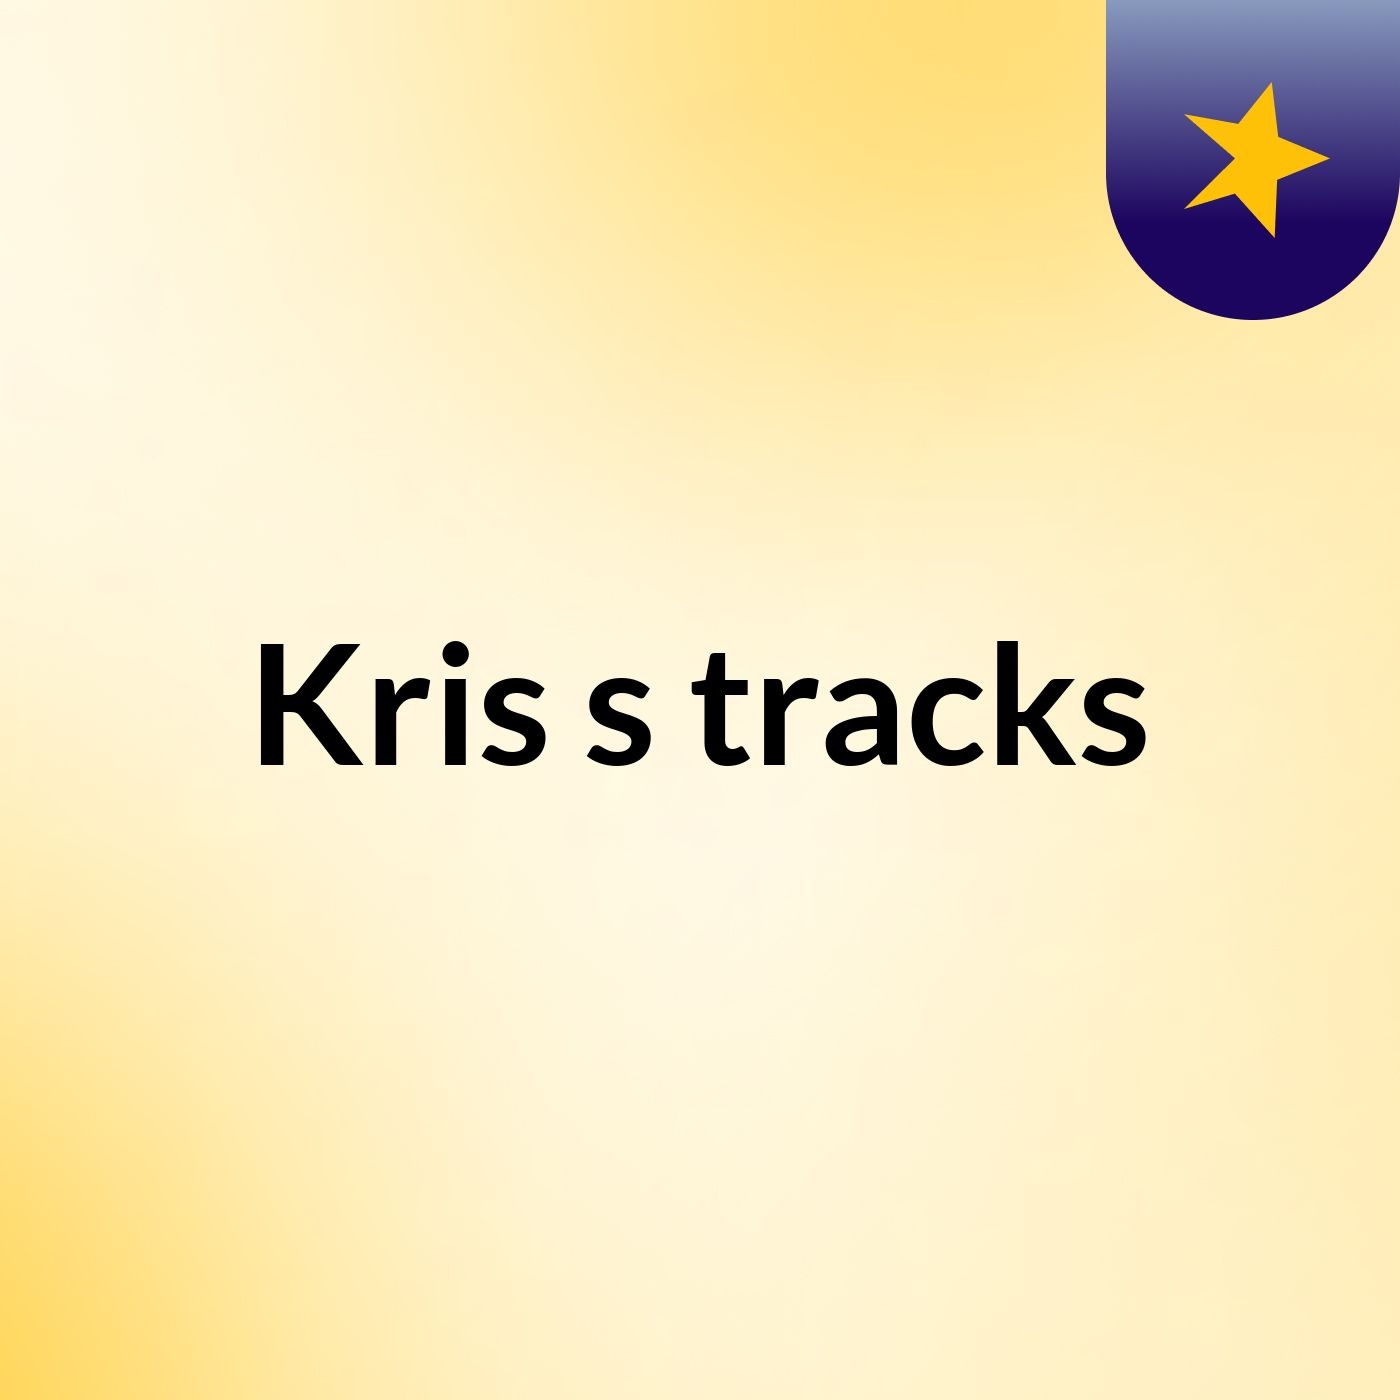 Kris's tracks